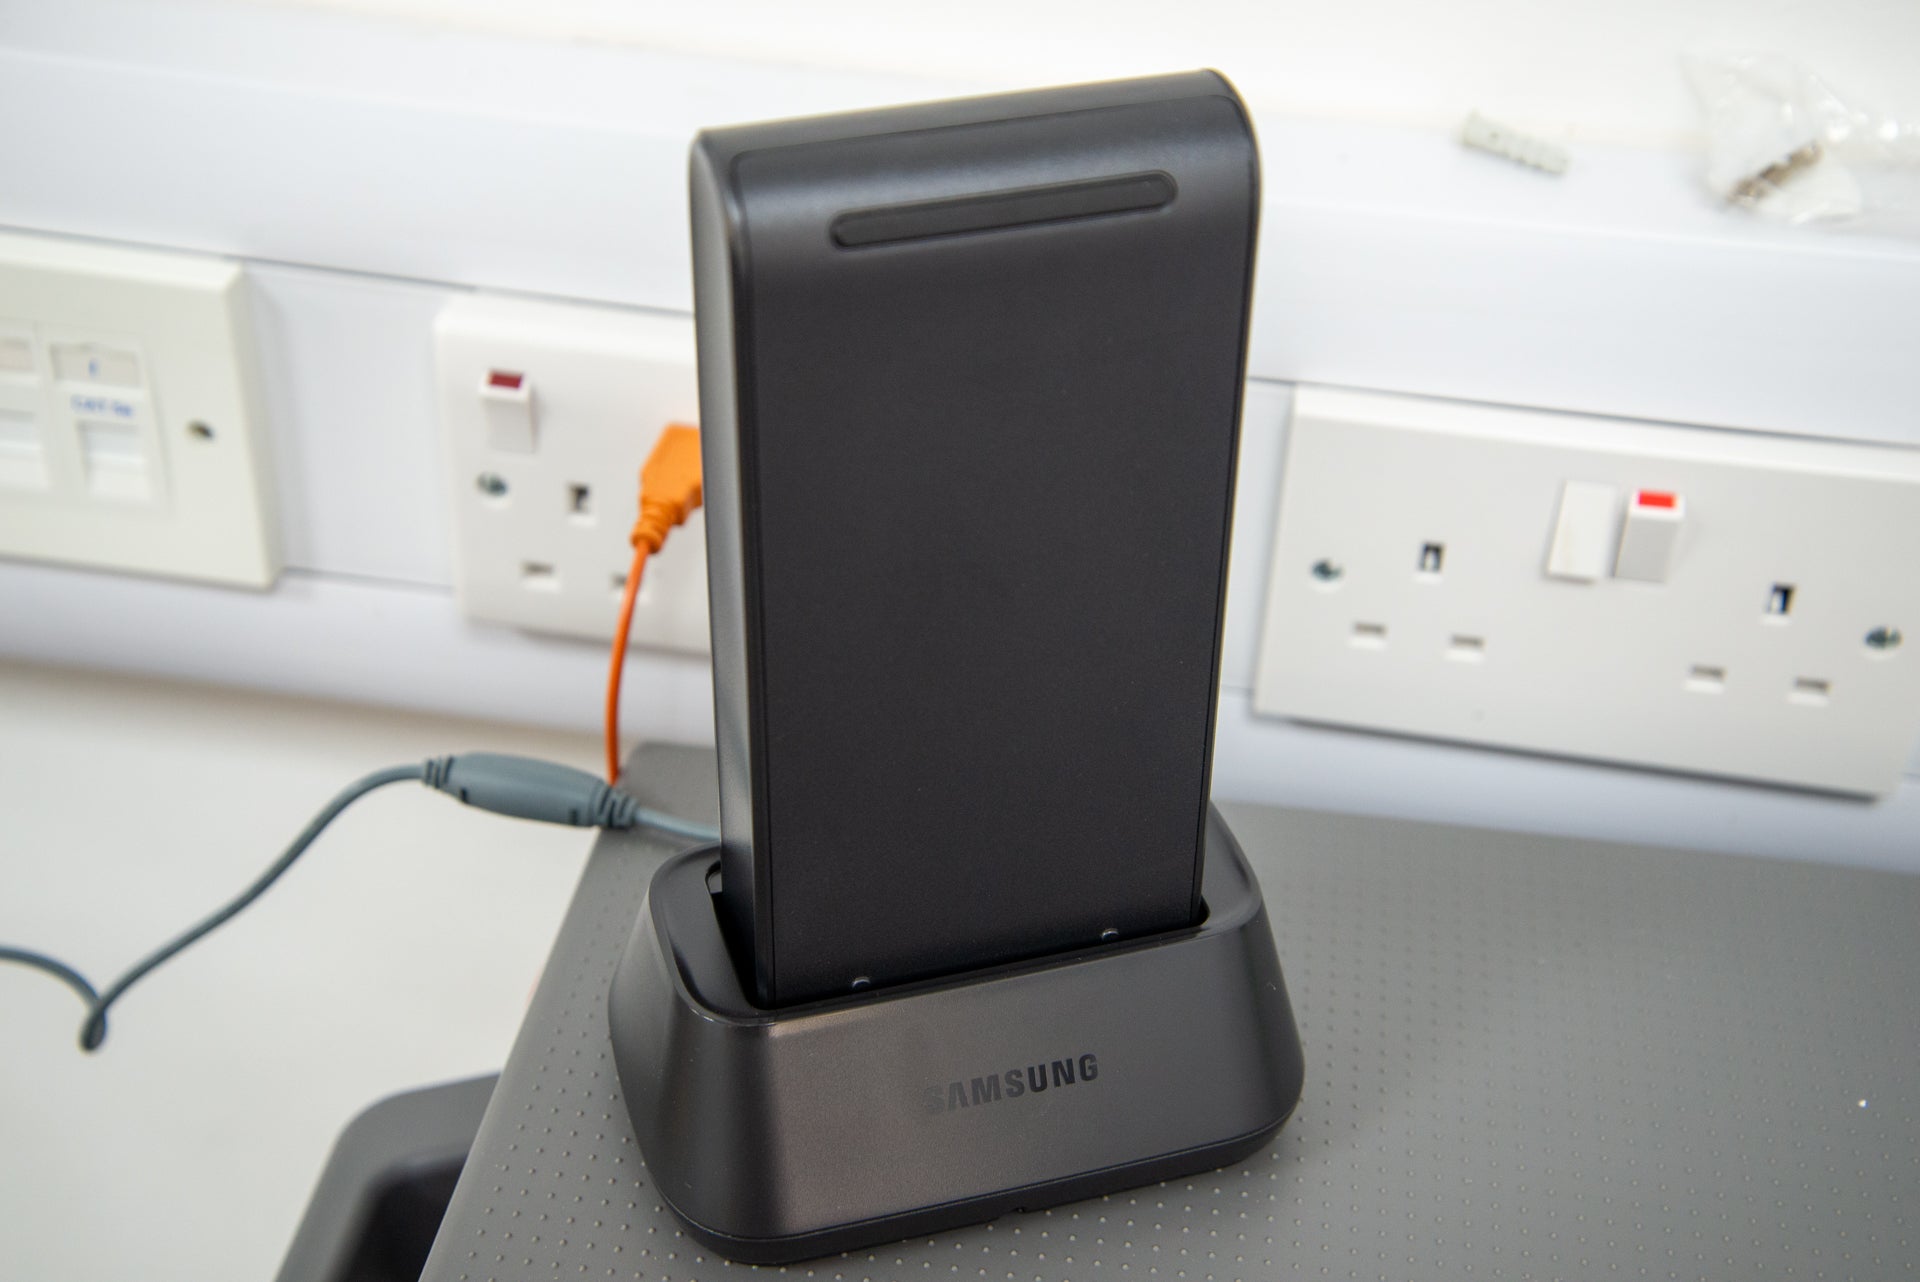 Samsung Bespoke Jet AI battery charger